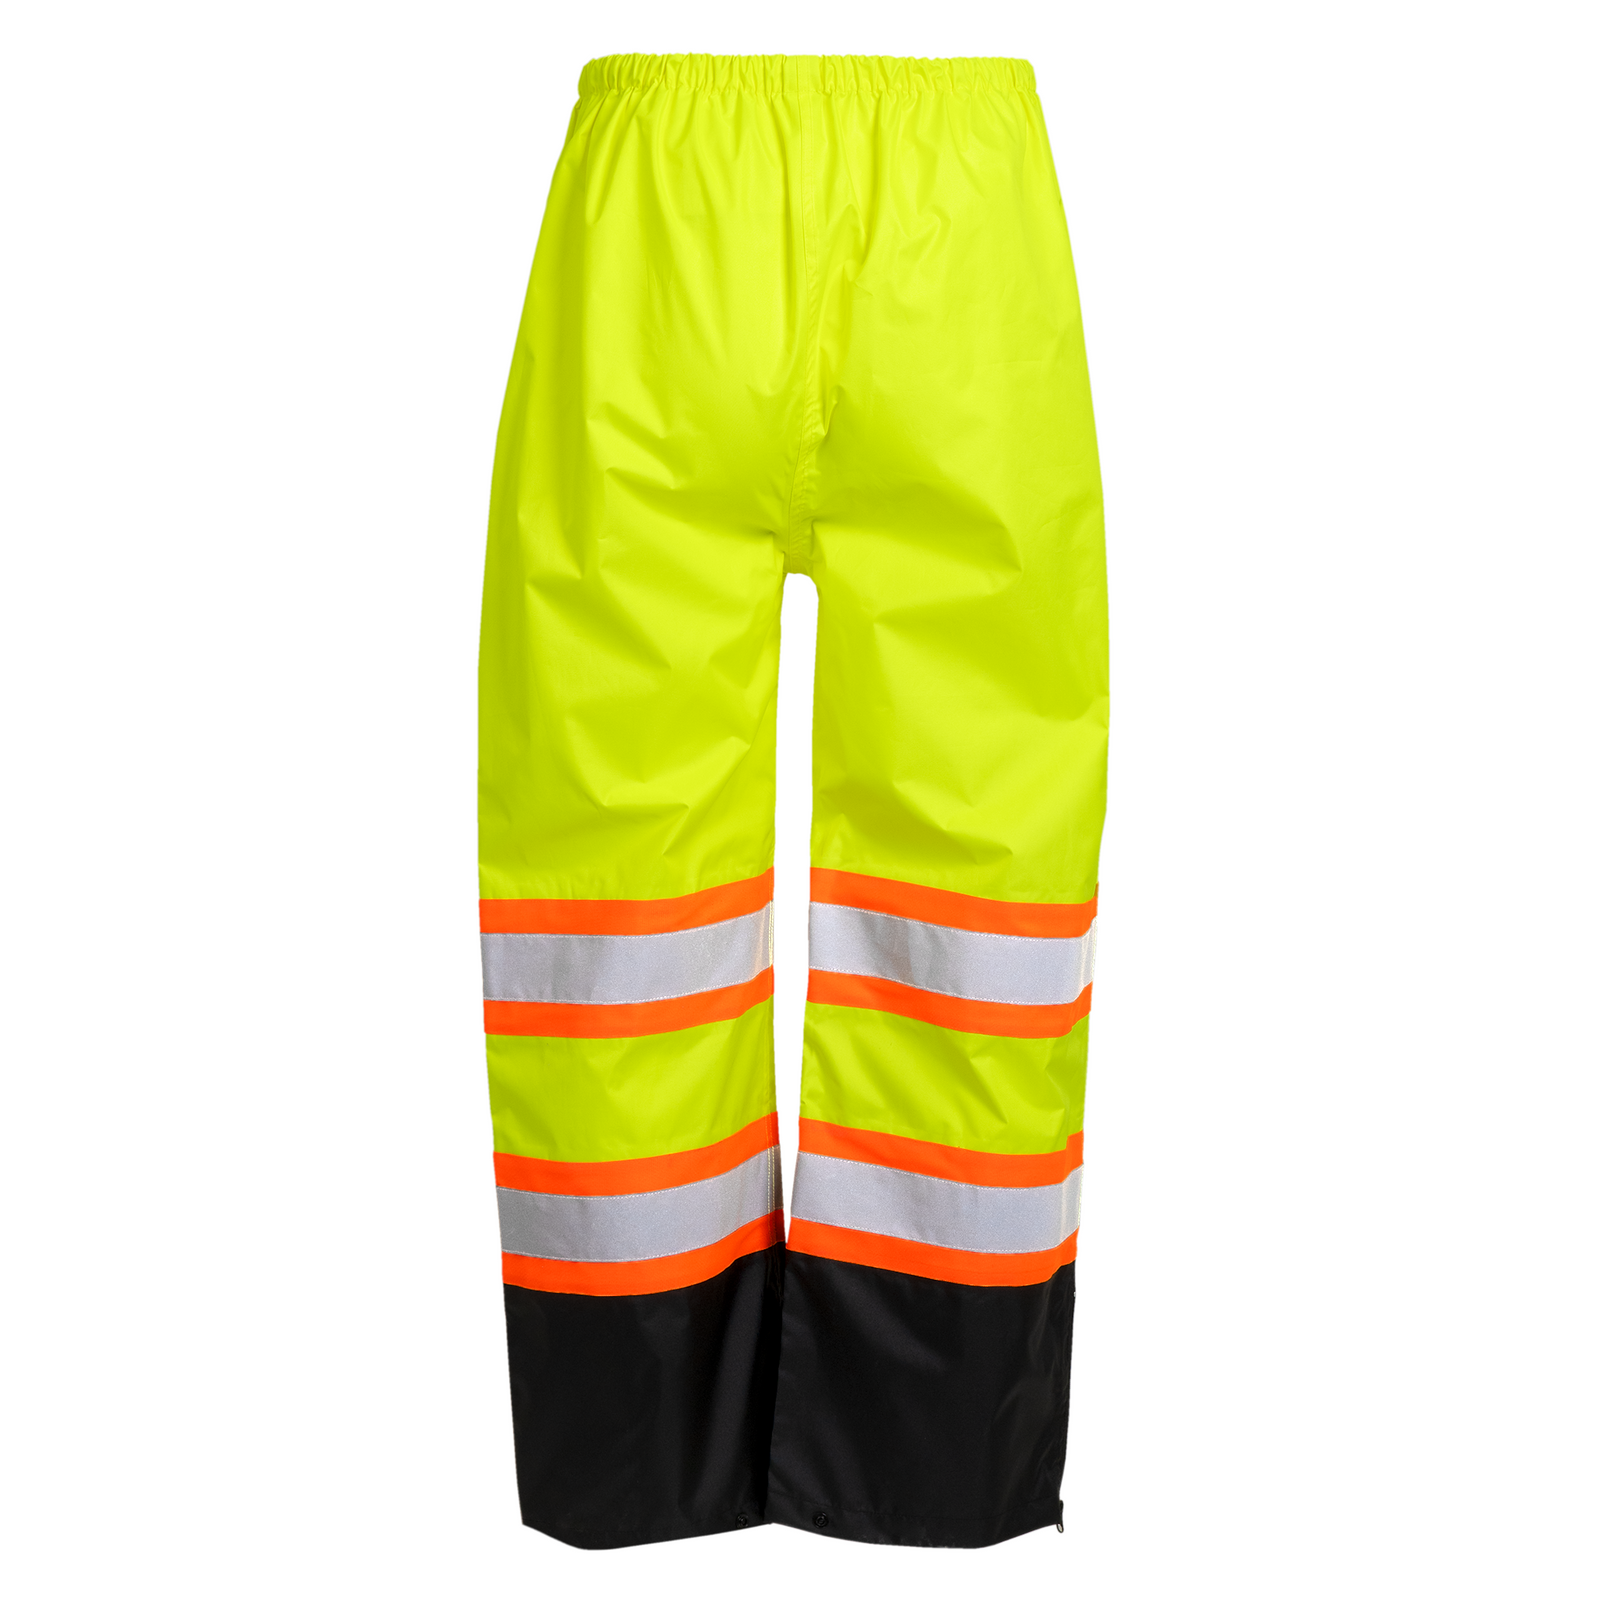 Yellow safety rain pants with reflective stripes ANSI Class E